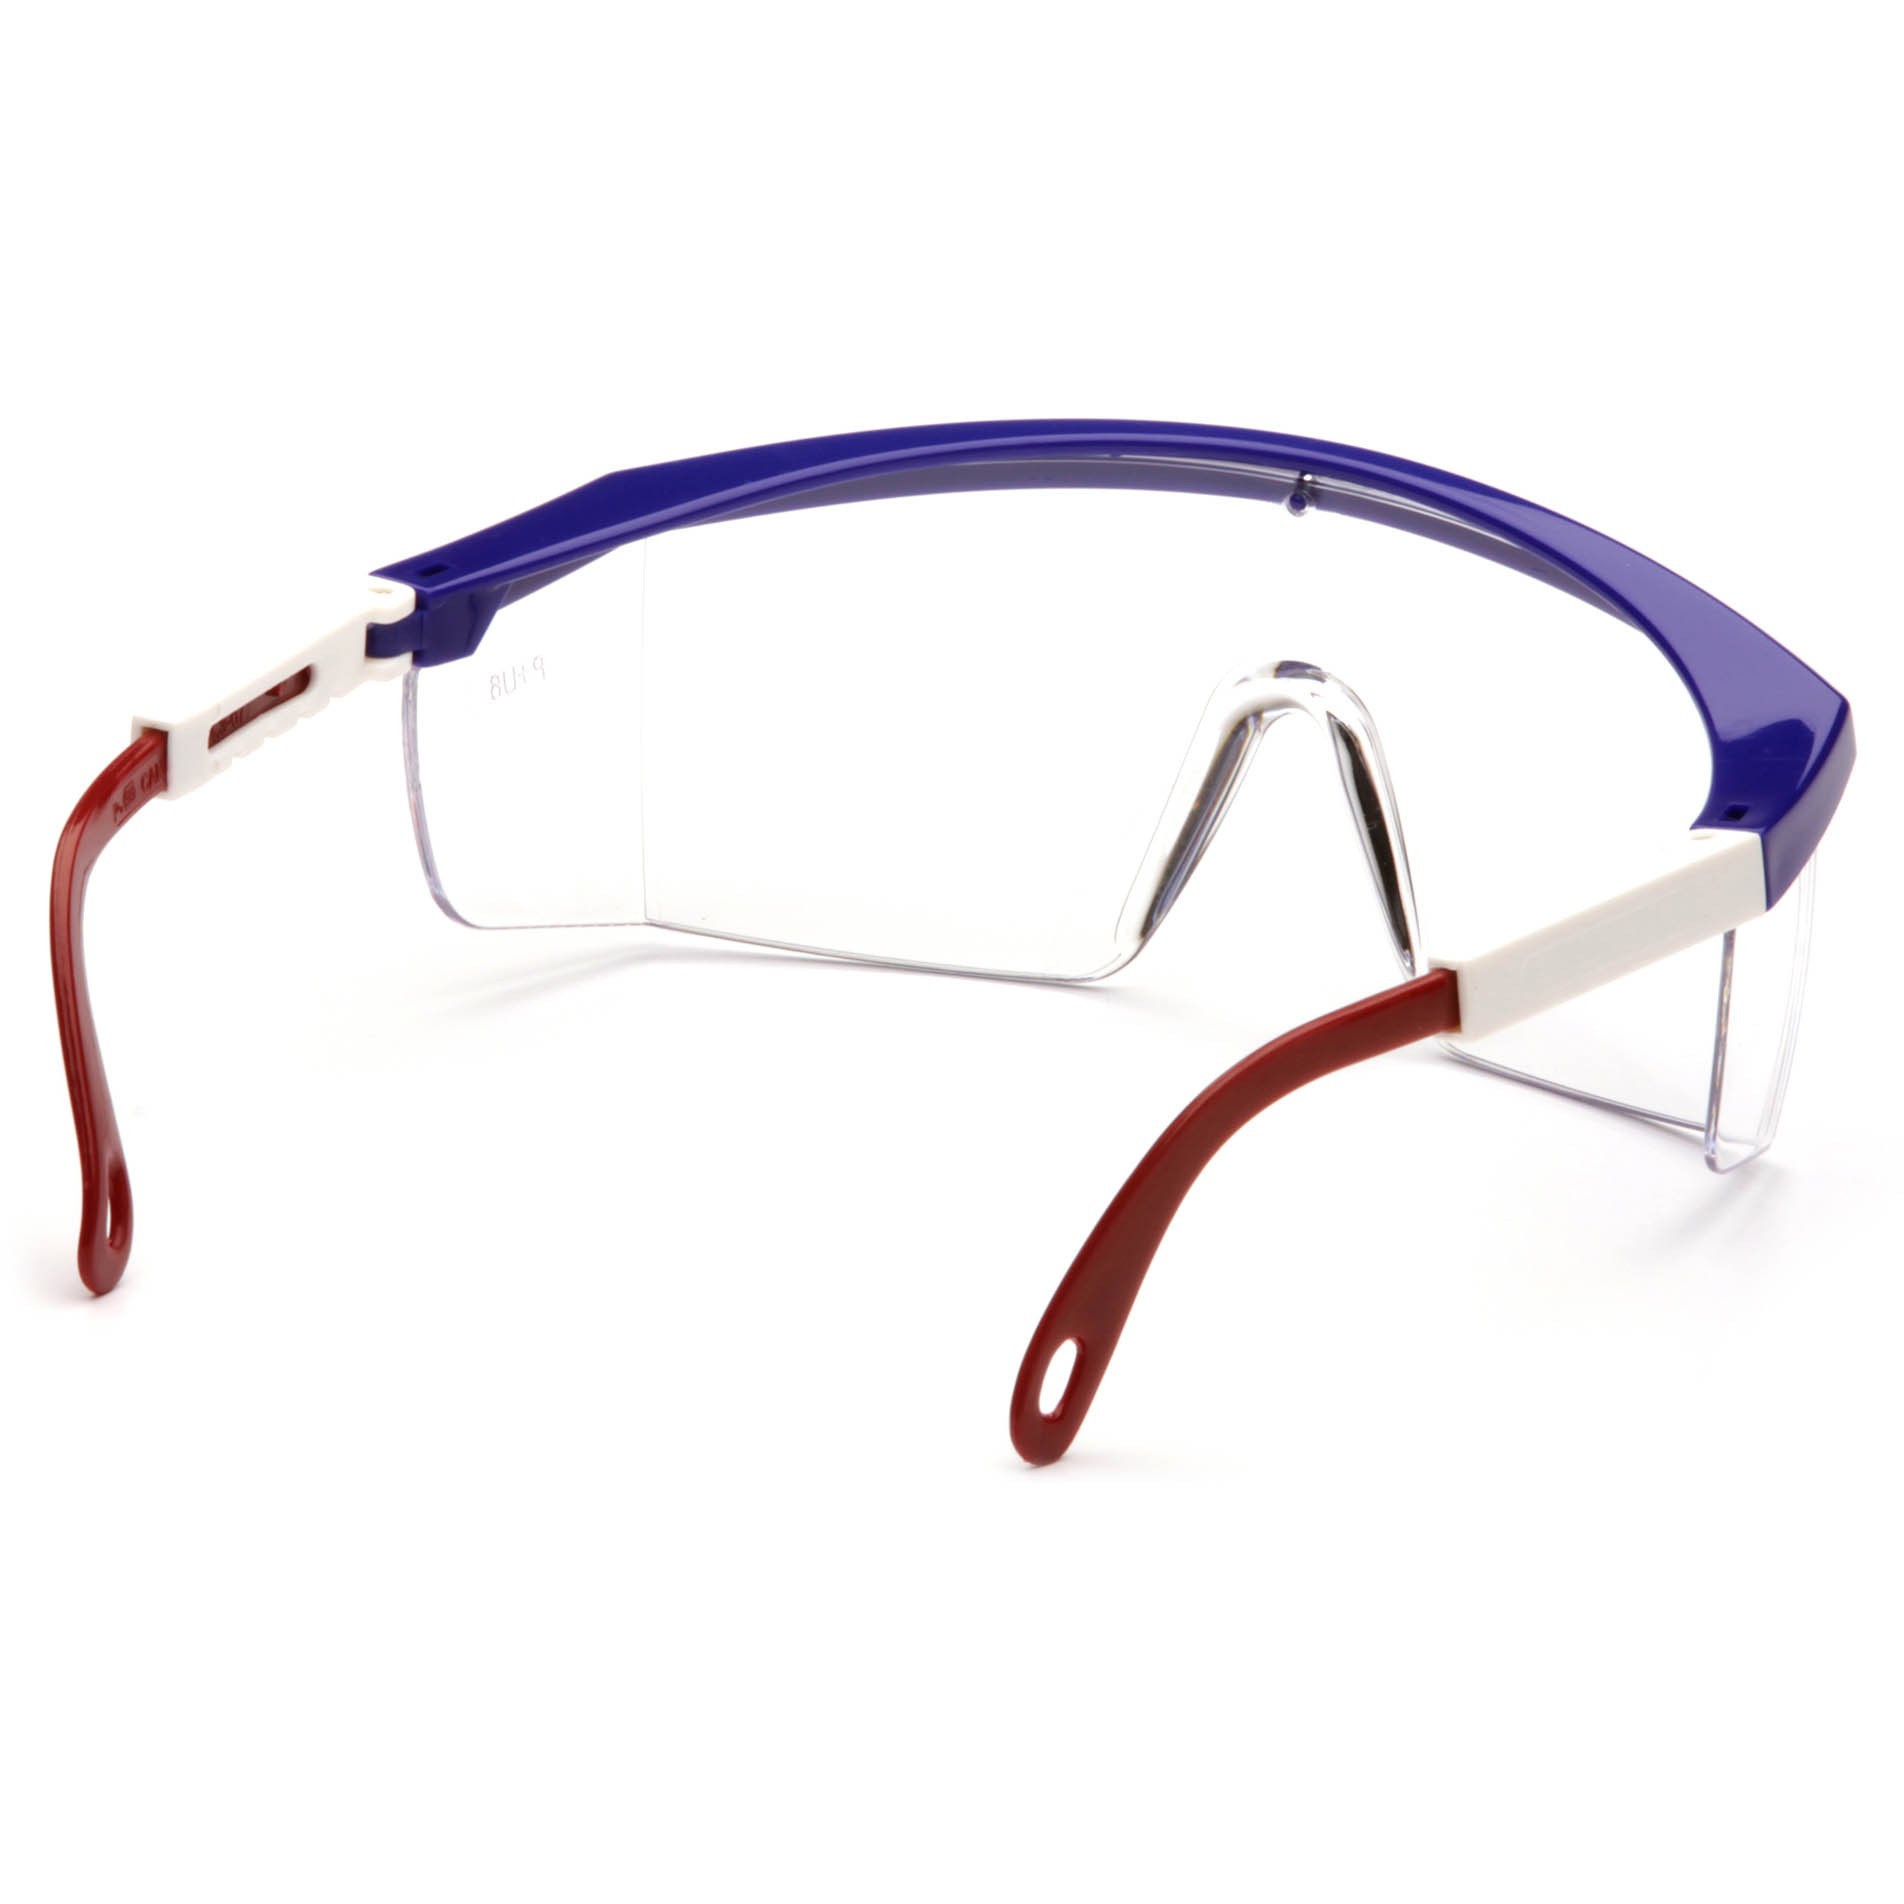 INTEGRA Safety Glasses Scratch-Resistant Clear Lens Multi-Color Frame 24 Pcs 